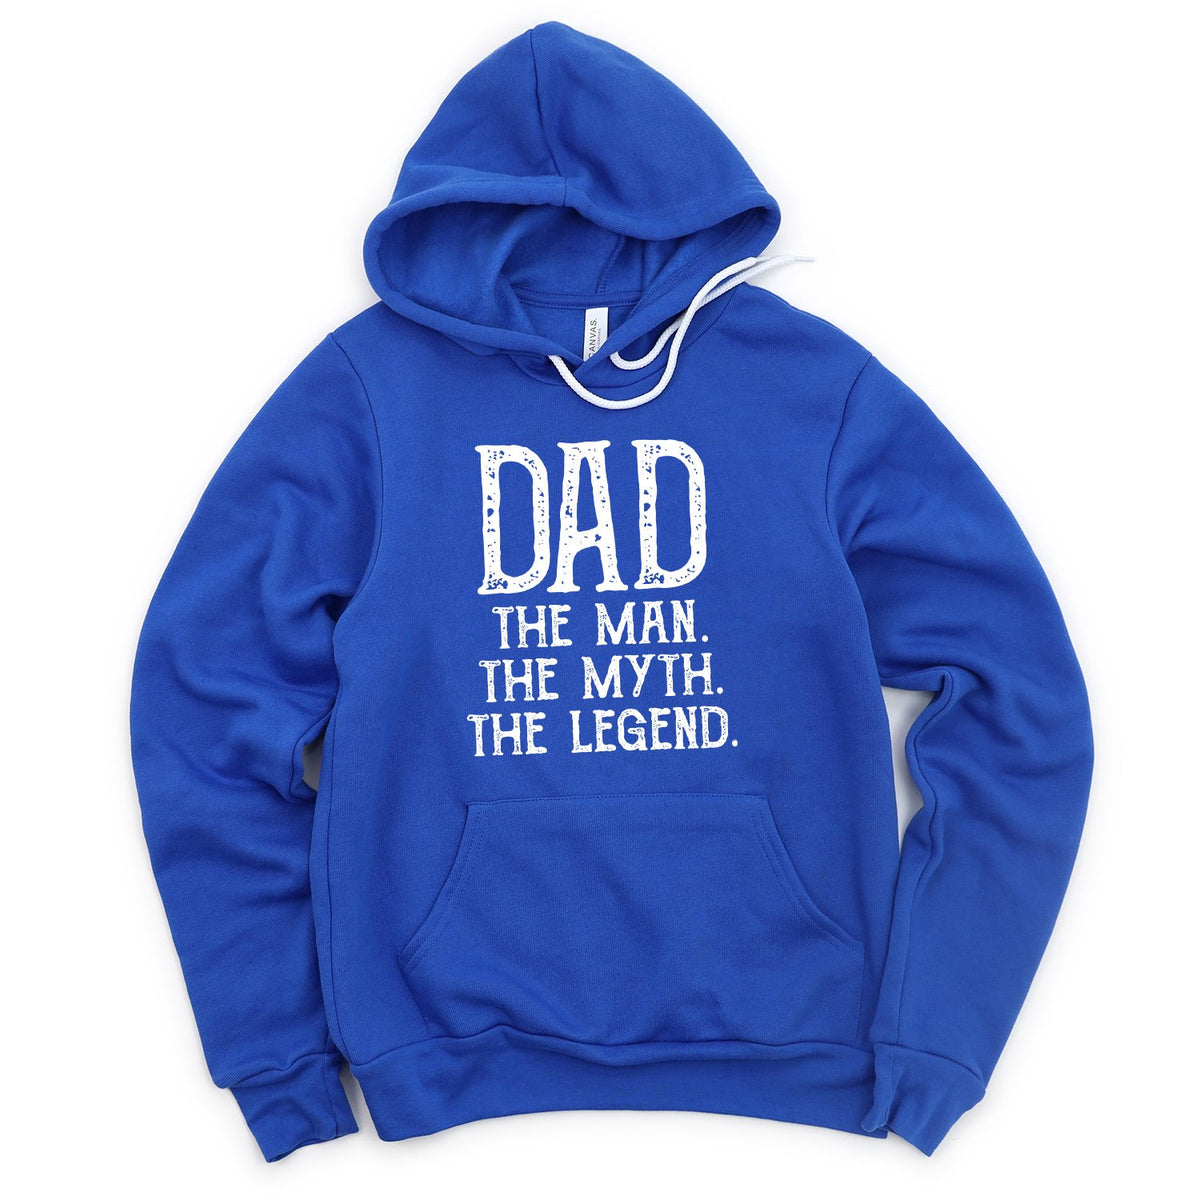 DAD The Man The Myth The Legend - Hoodie Sweatshirt